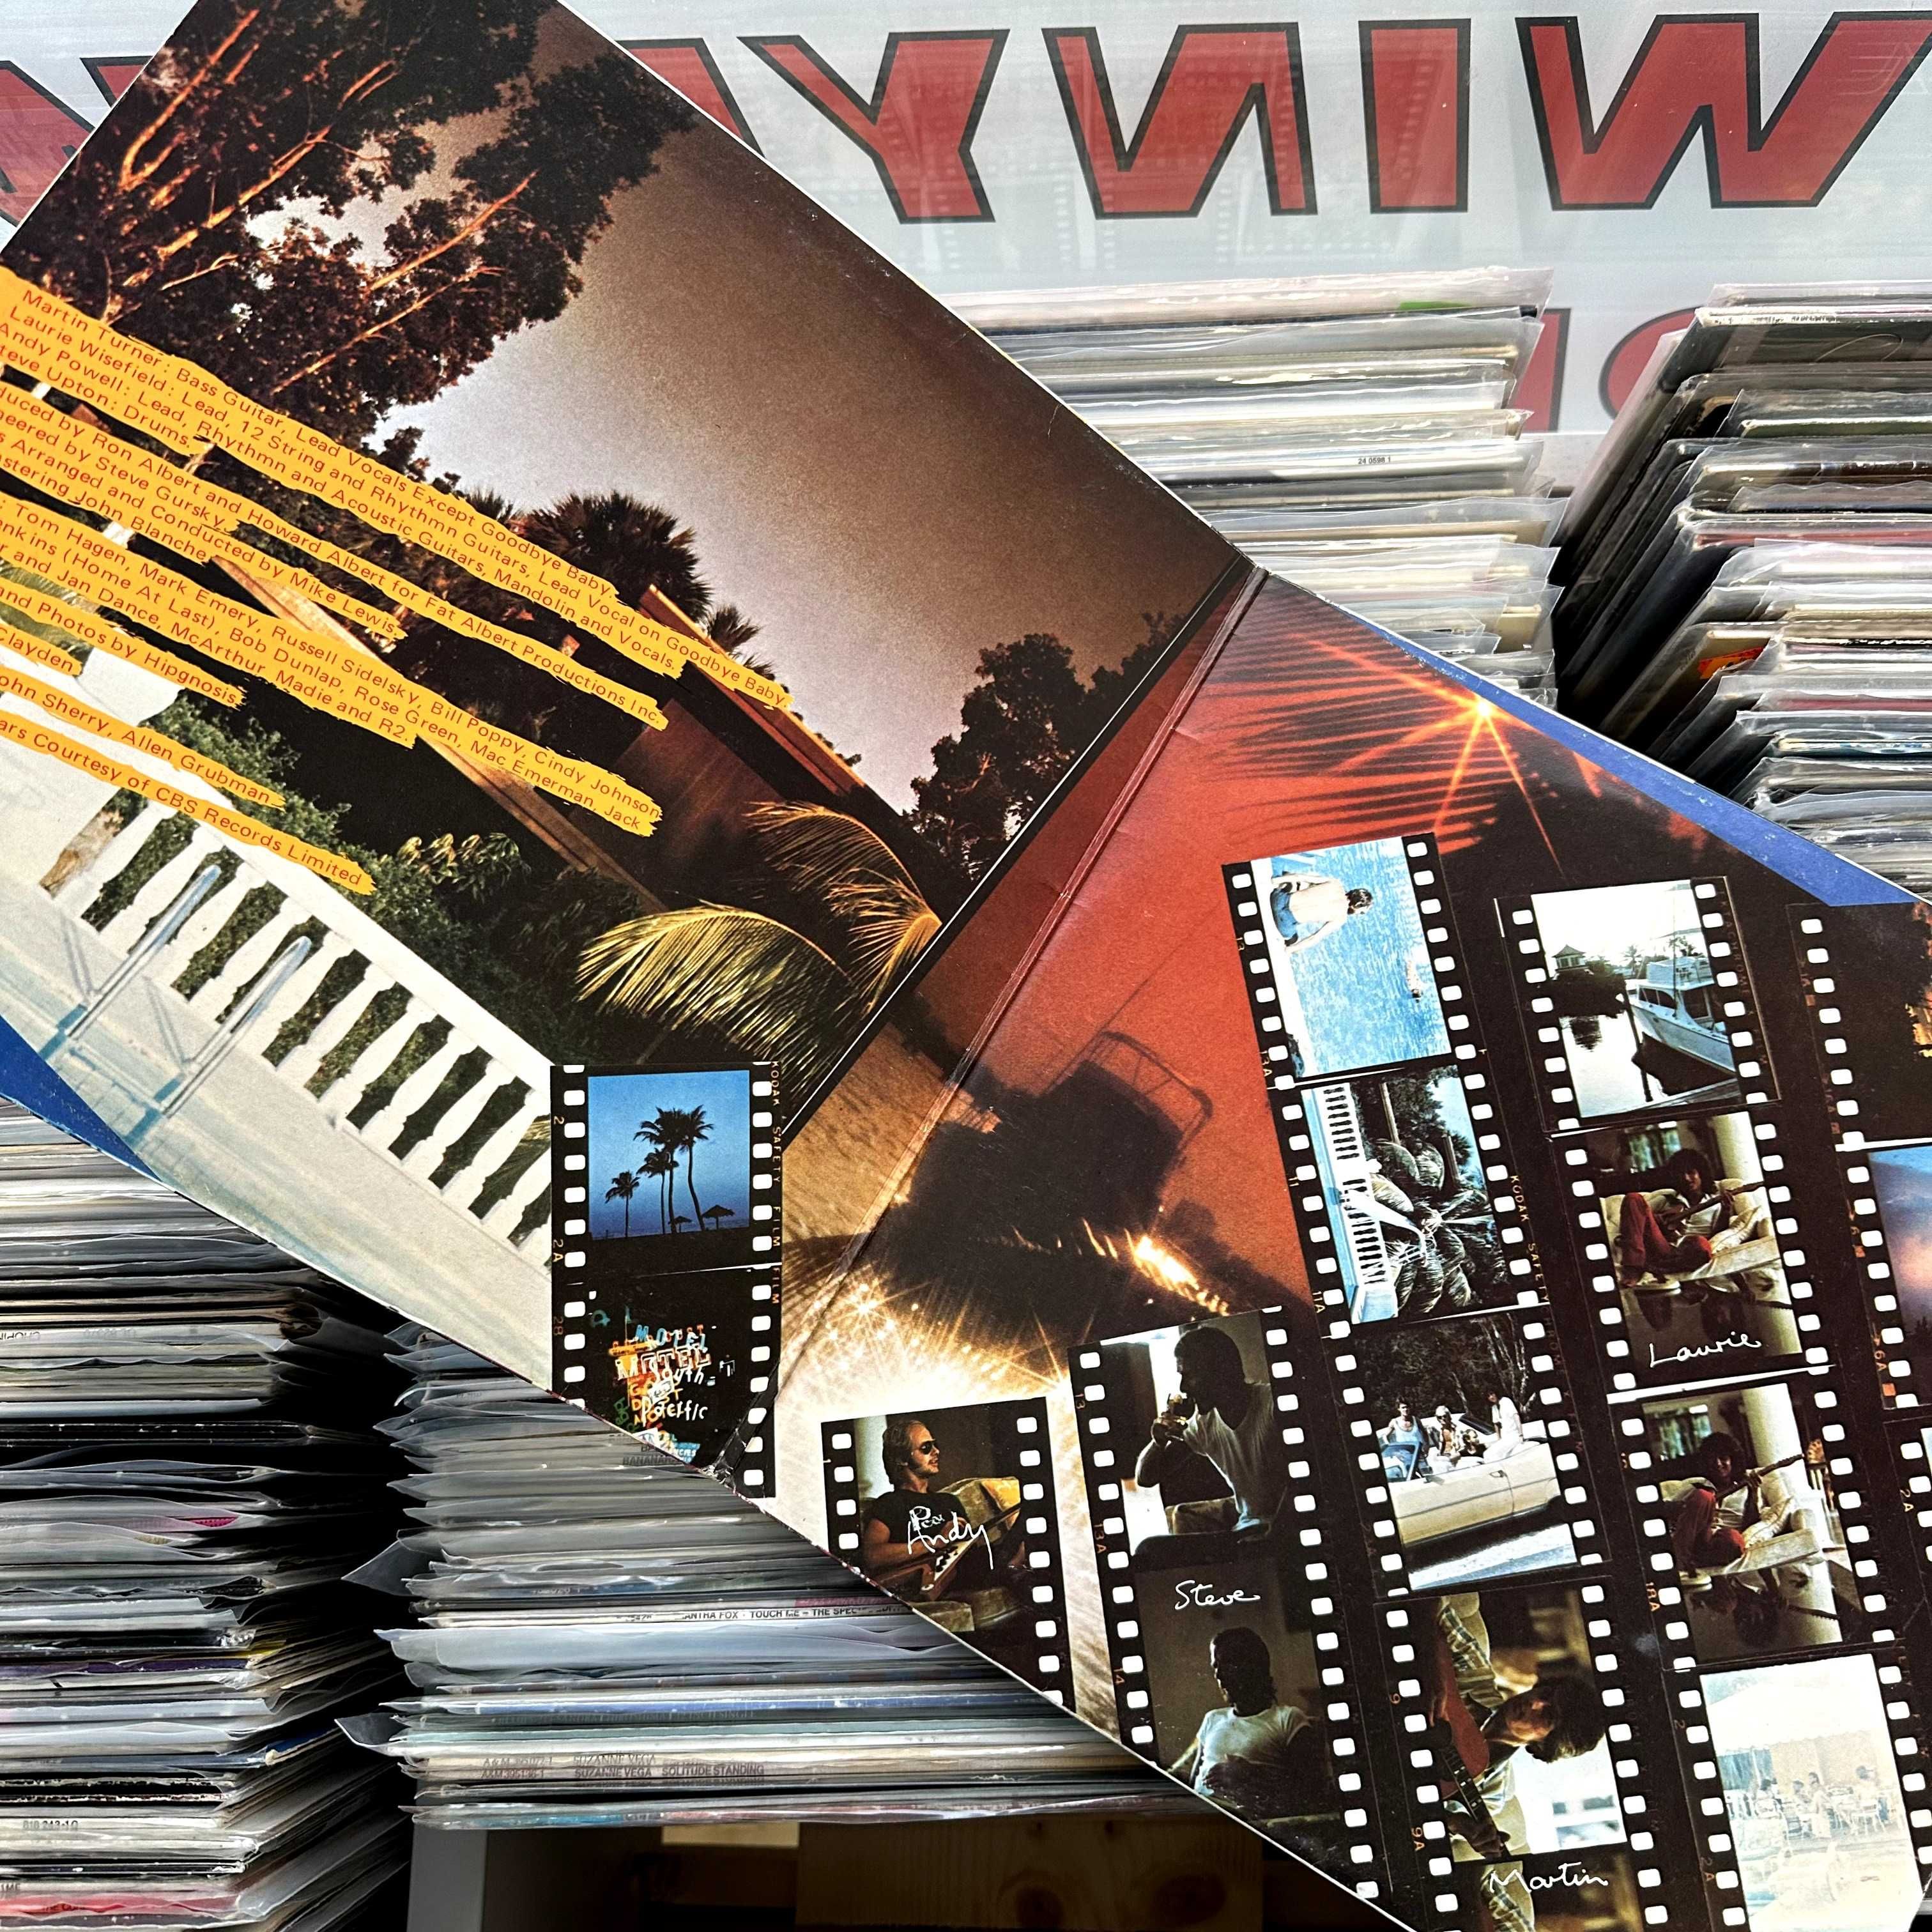 Wishbone Ash - Front Page News (Vinyl, 1977, UK)